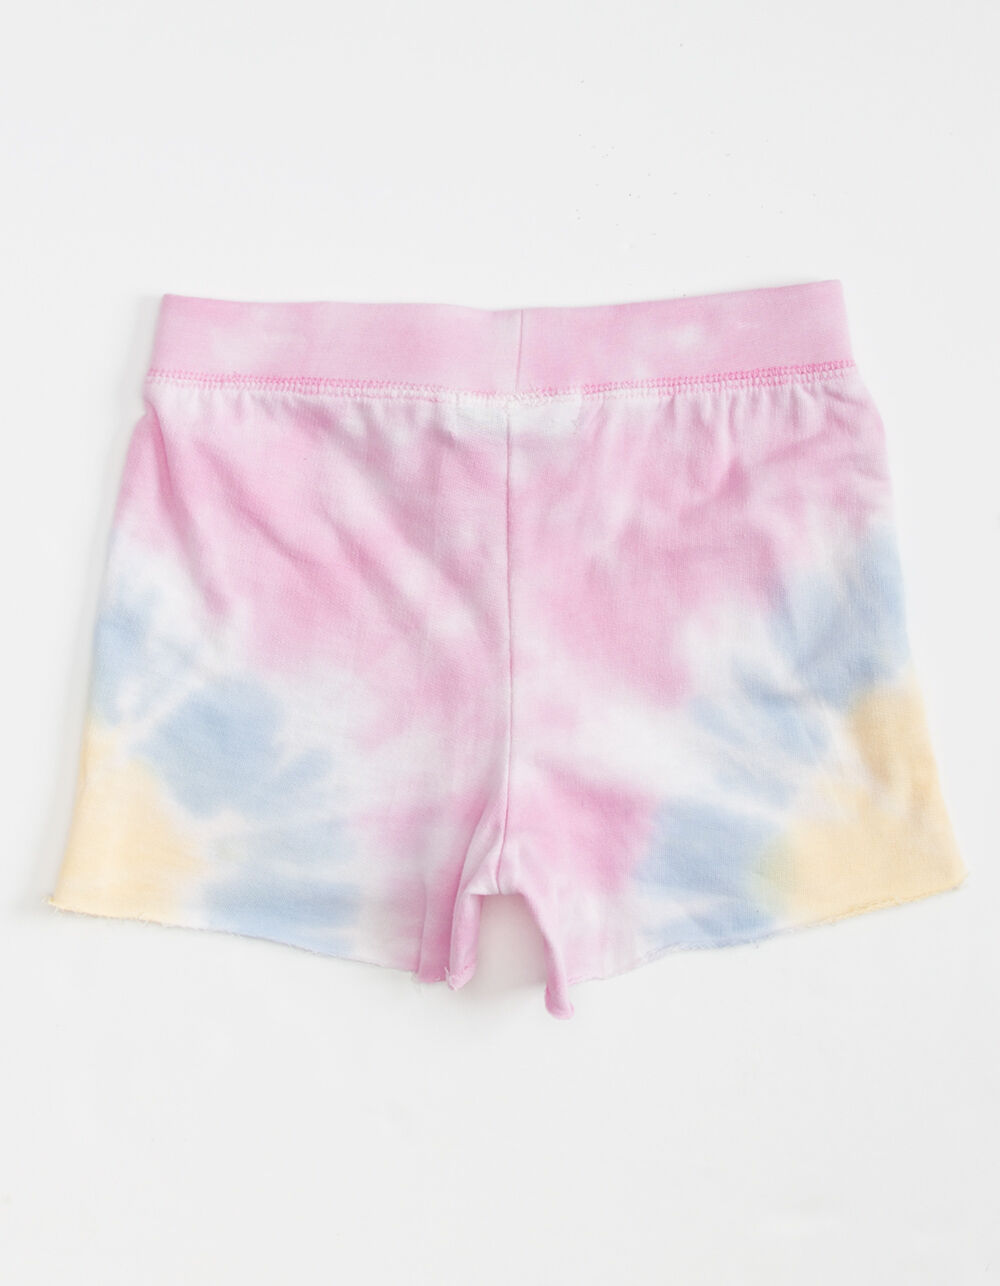 FULL CIRCLE TRENDS Tie Dye Graphic Girls Pink Sweat Shorts - PINK | Tillys